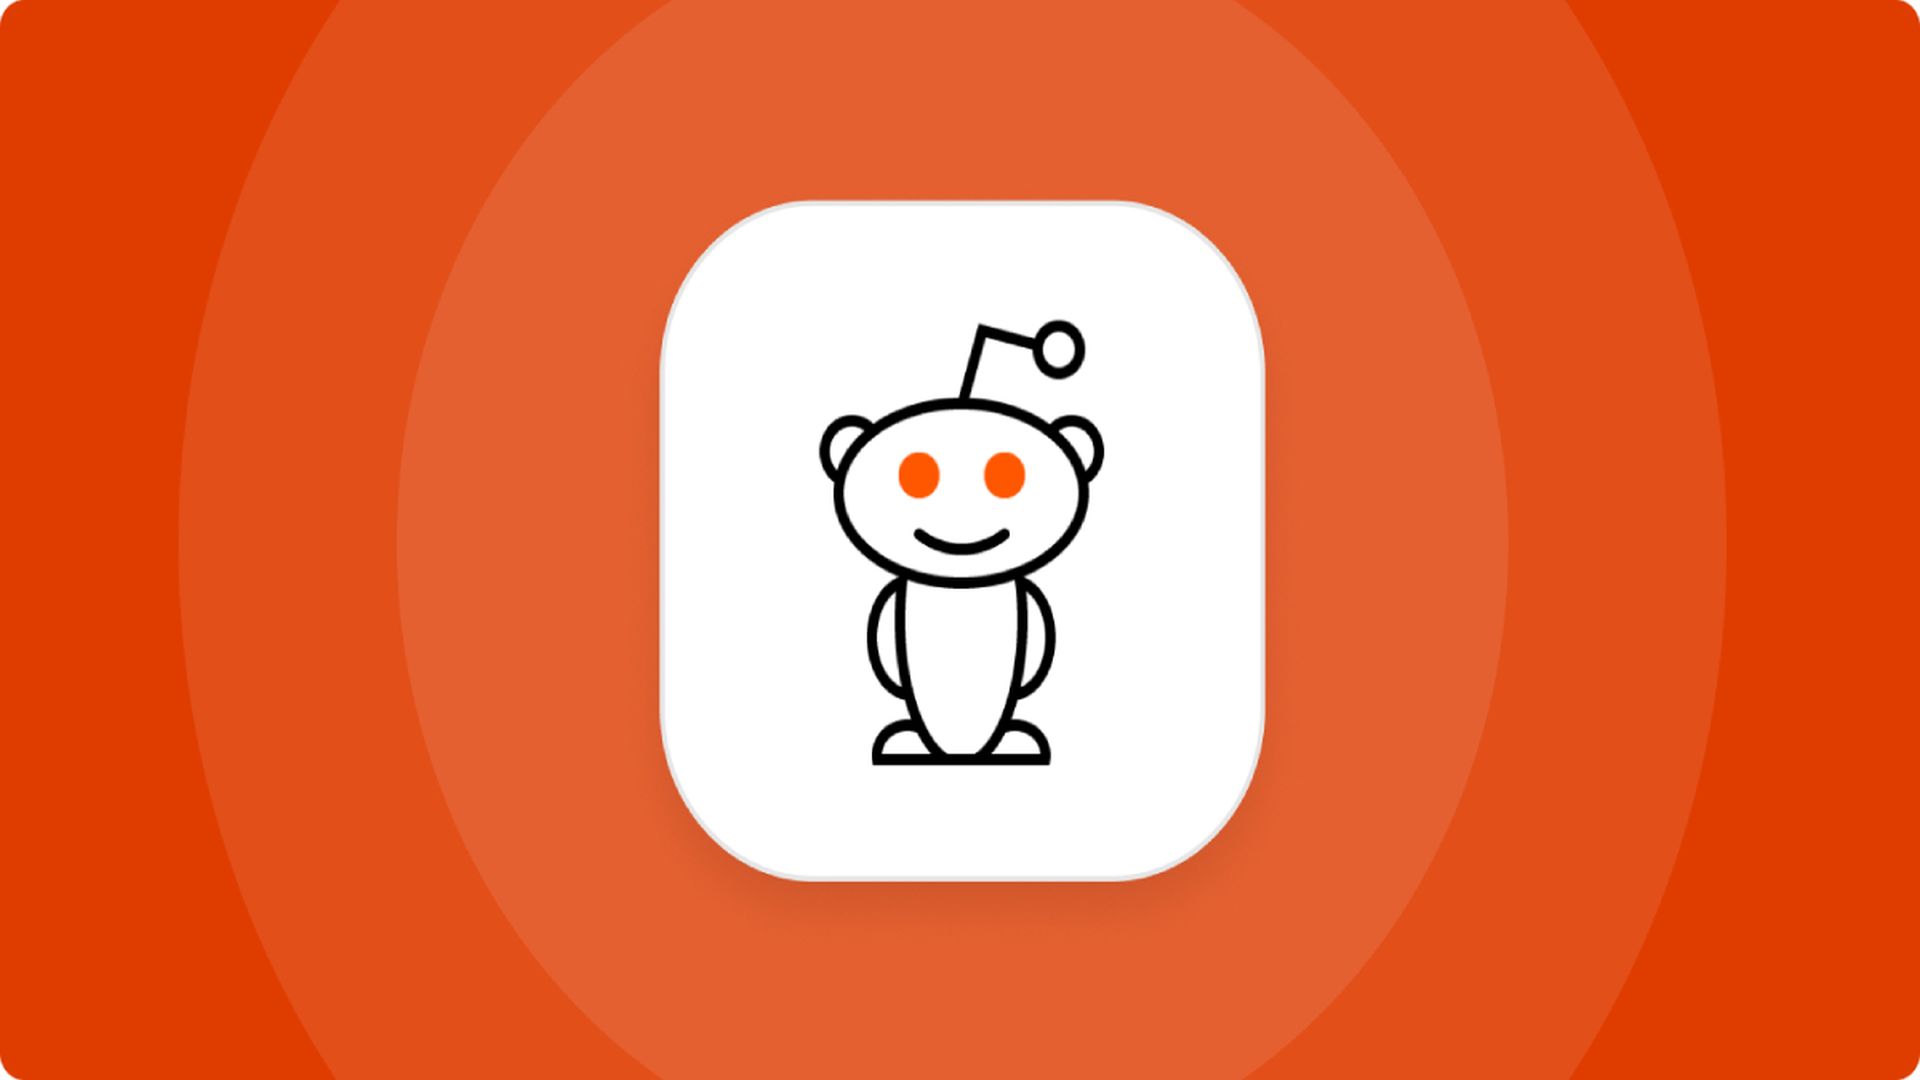 Reddit moderator rewards,Mod Helper Program